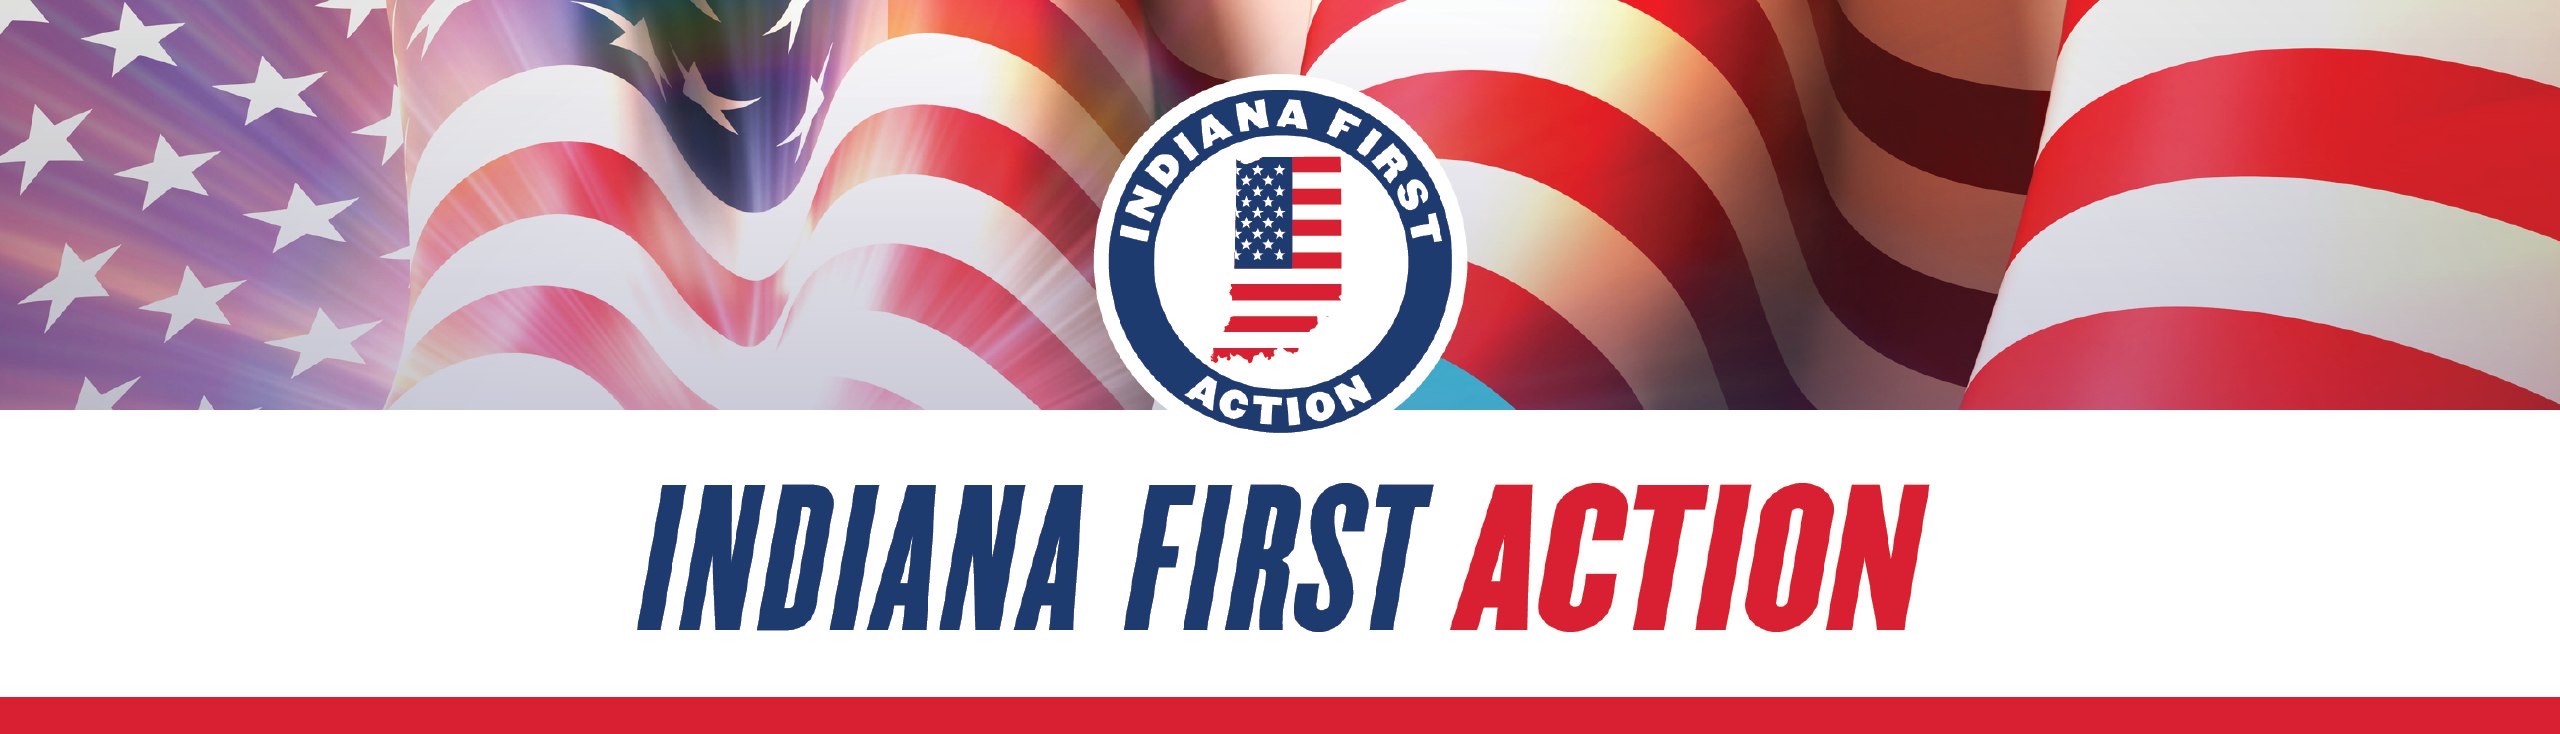 IFA Legislative Update - Indiana First Action